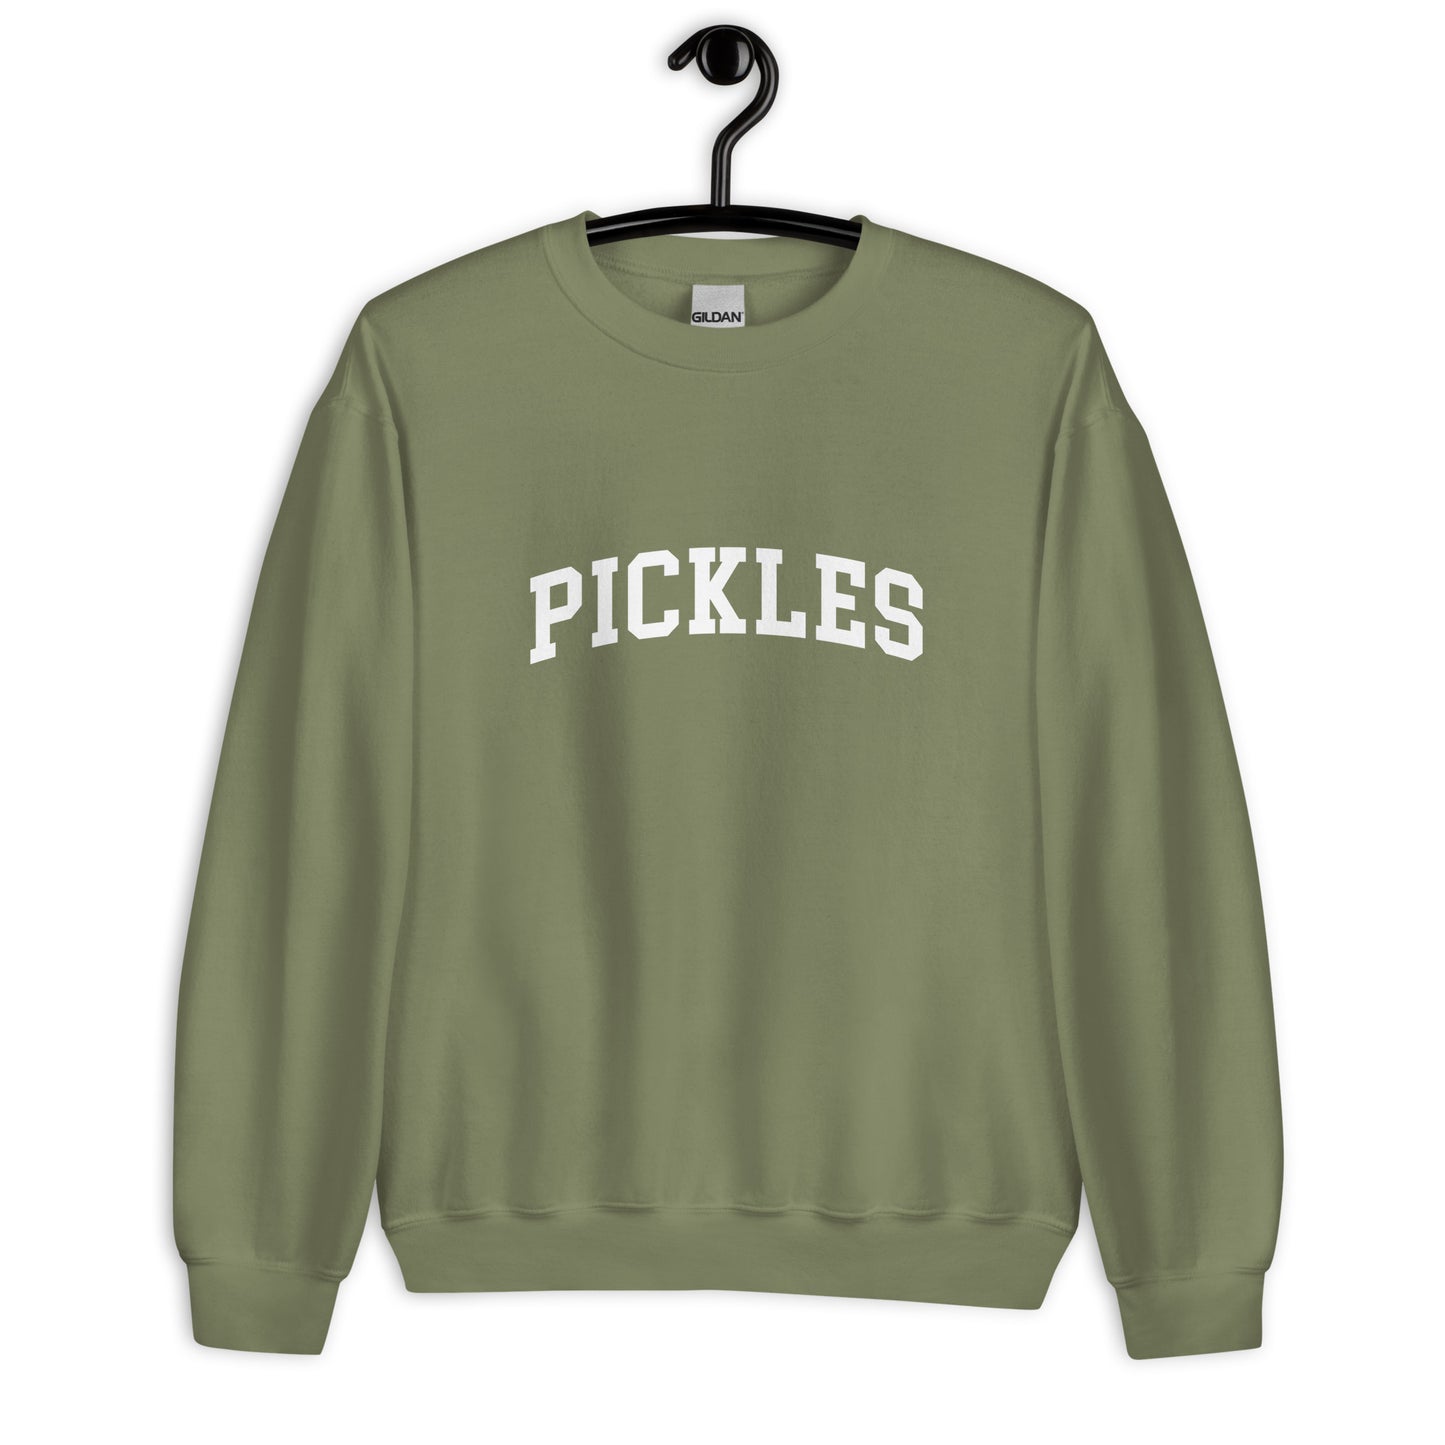 Pickles Sweatshirt - Arched Font